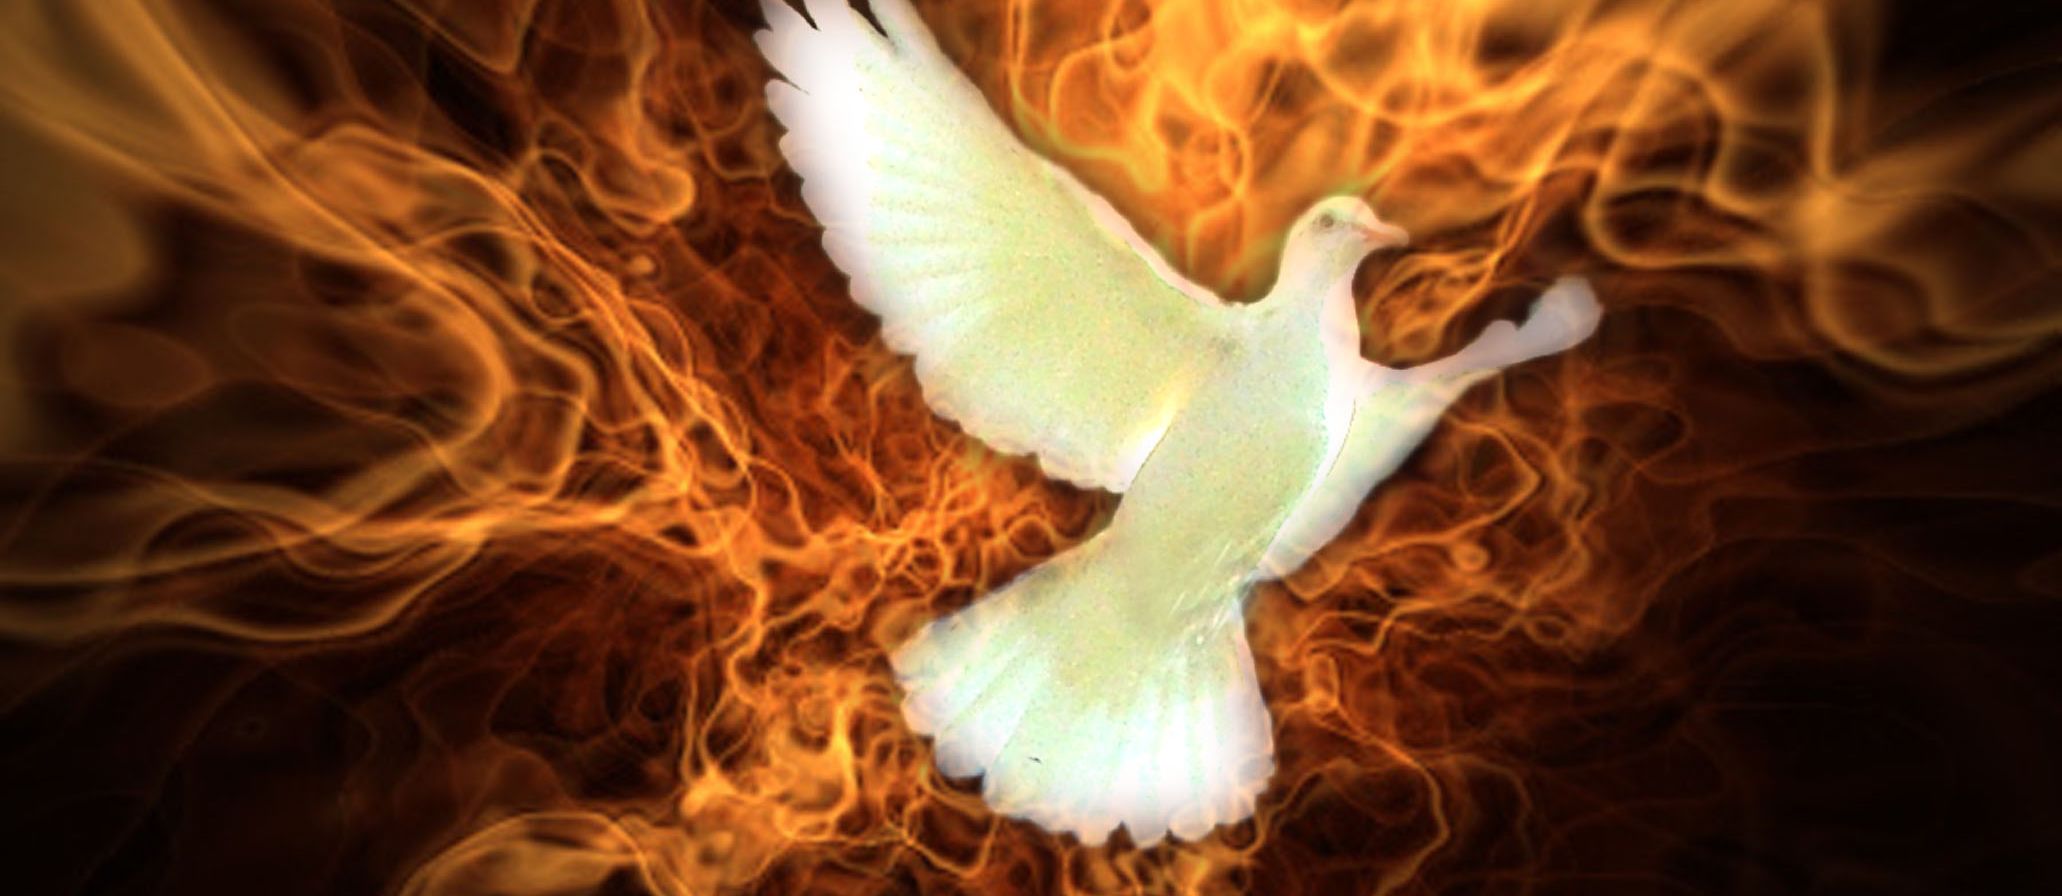 http://joyousjewels.files.wordpress.com/2011/04/holy-spirit-and-fire.jpg